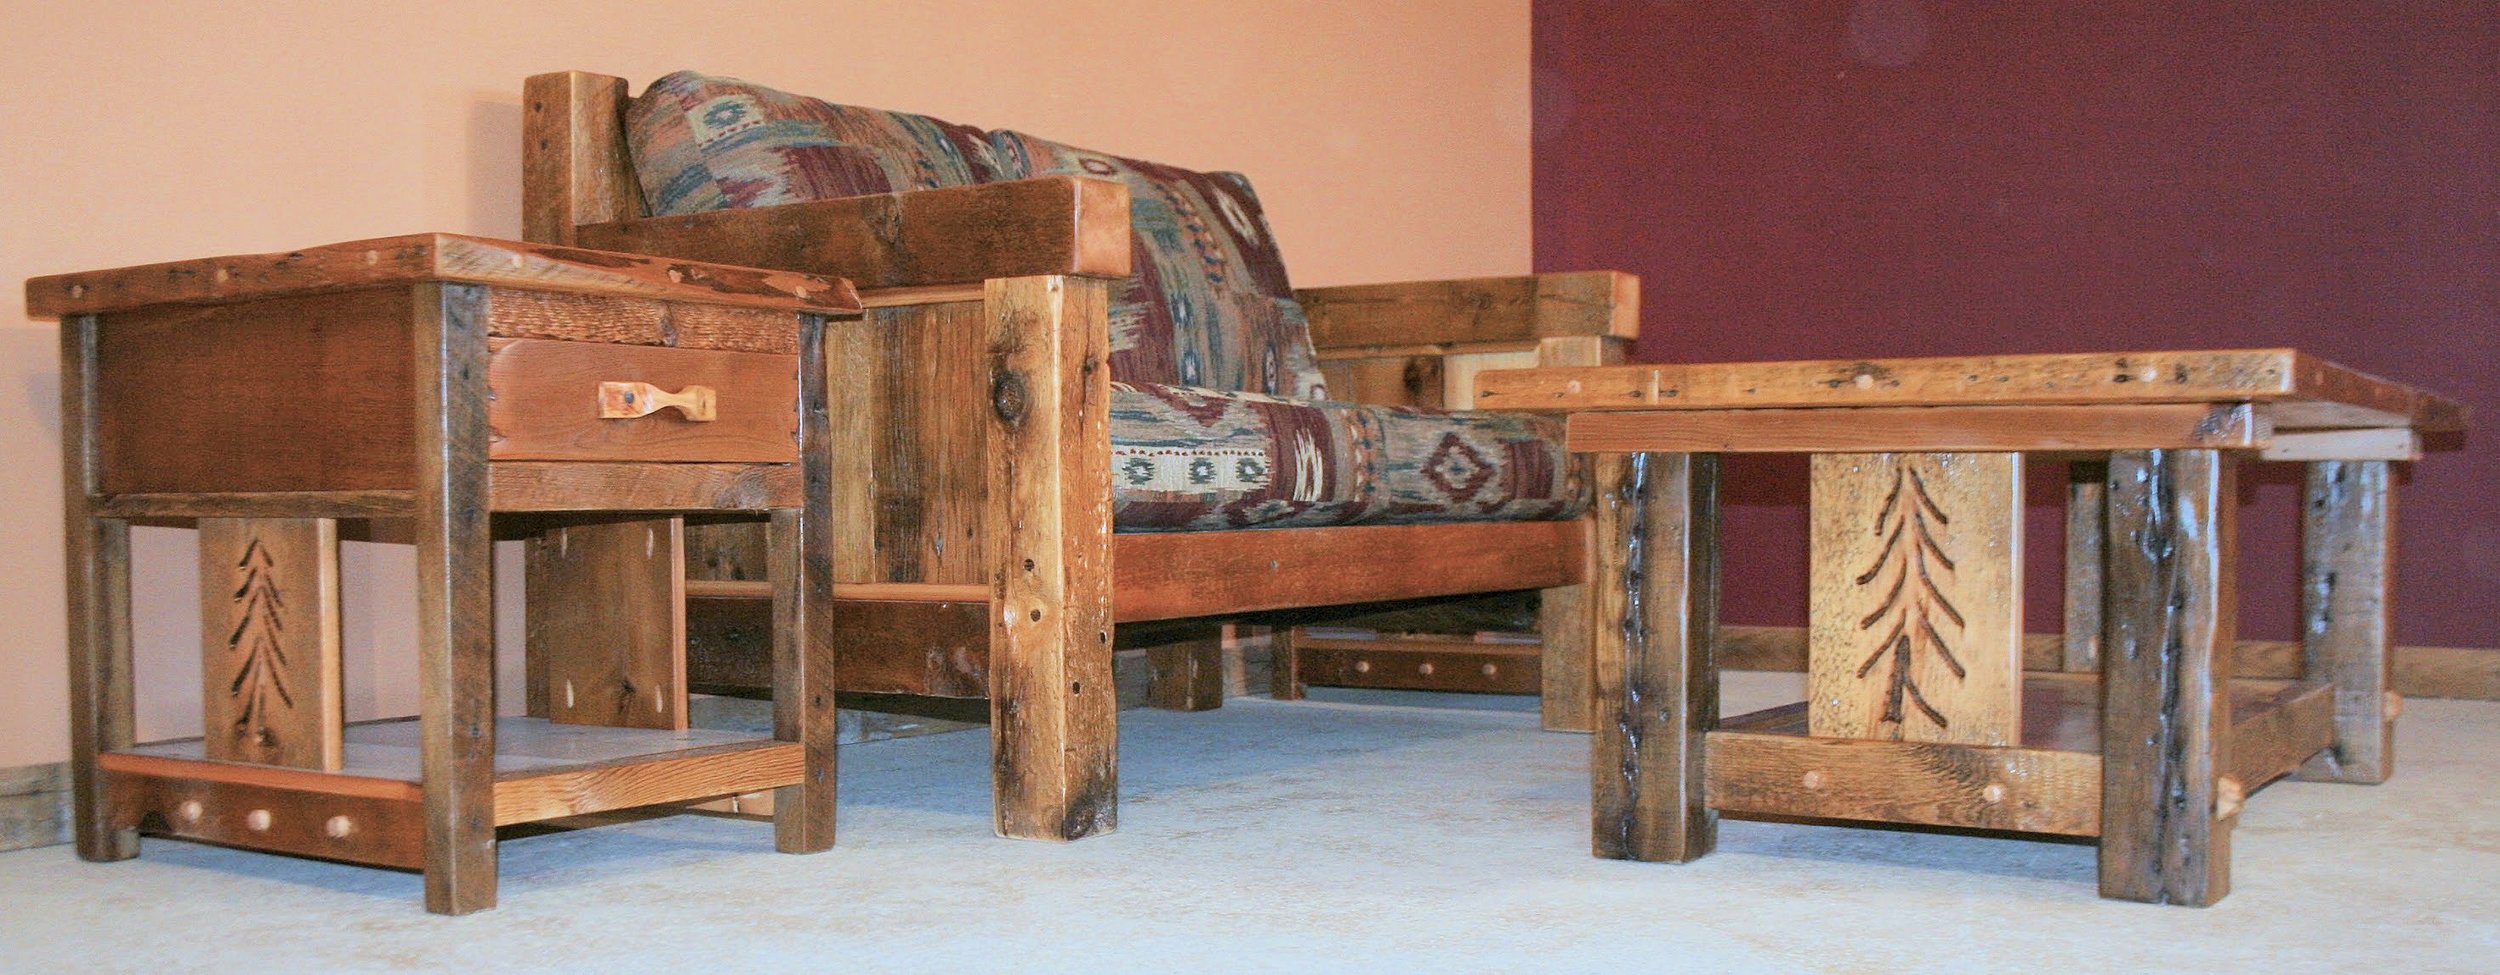 Barn Wood Furniture Rustic Barnwood And Log Furniture By Vienna